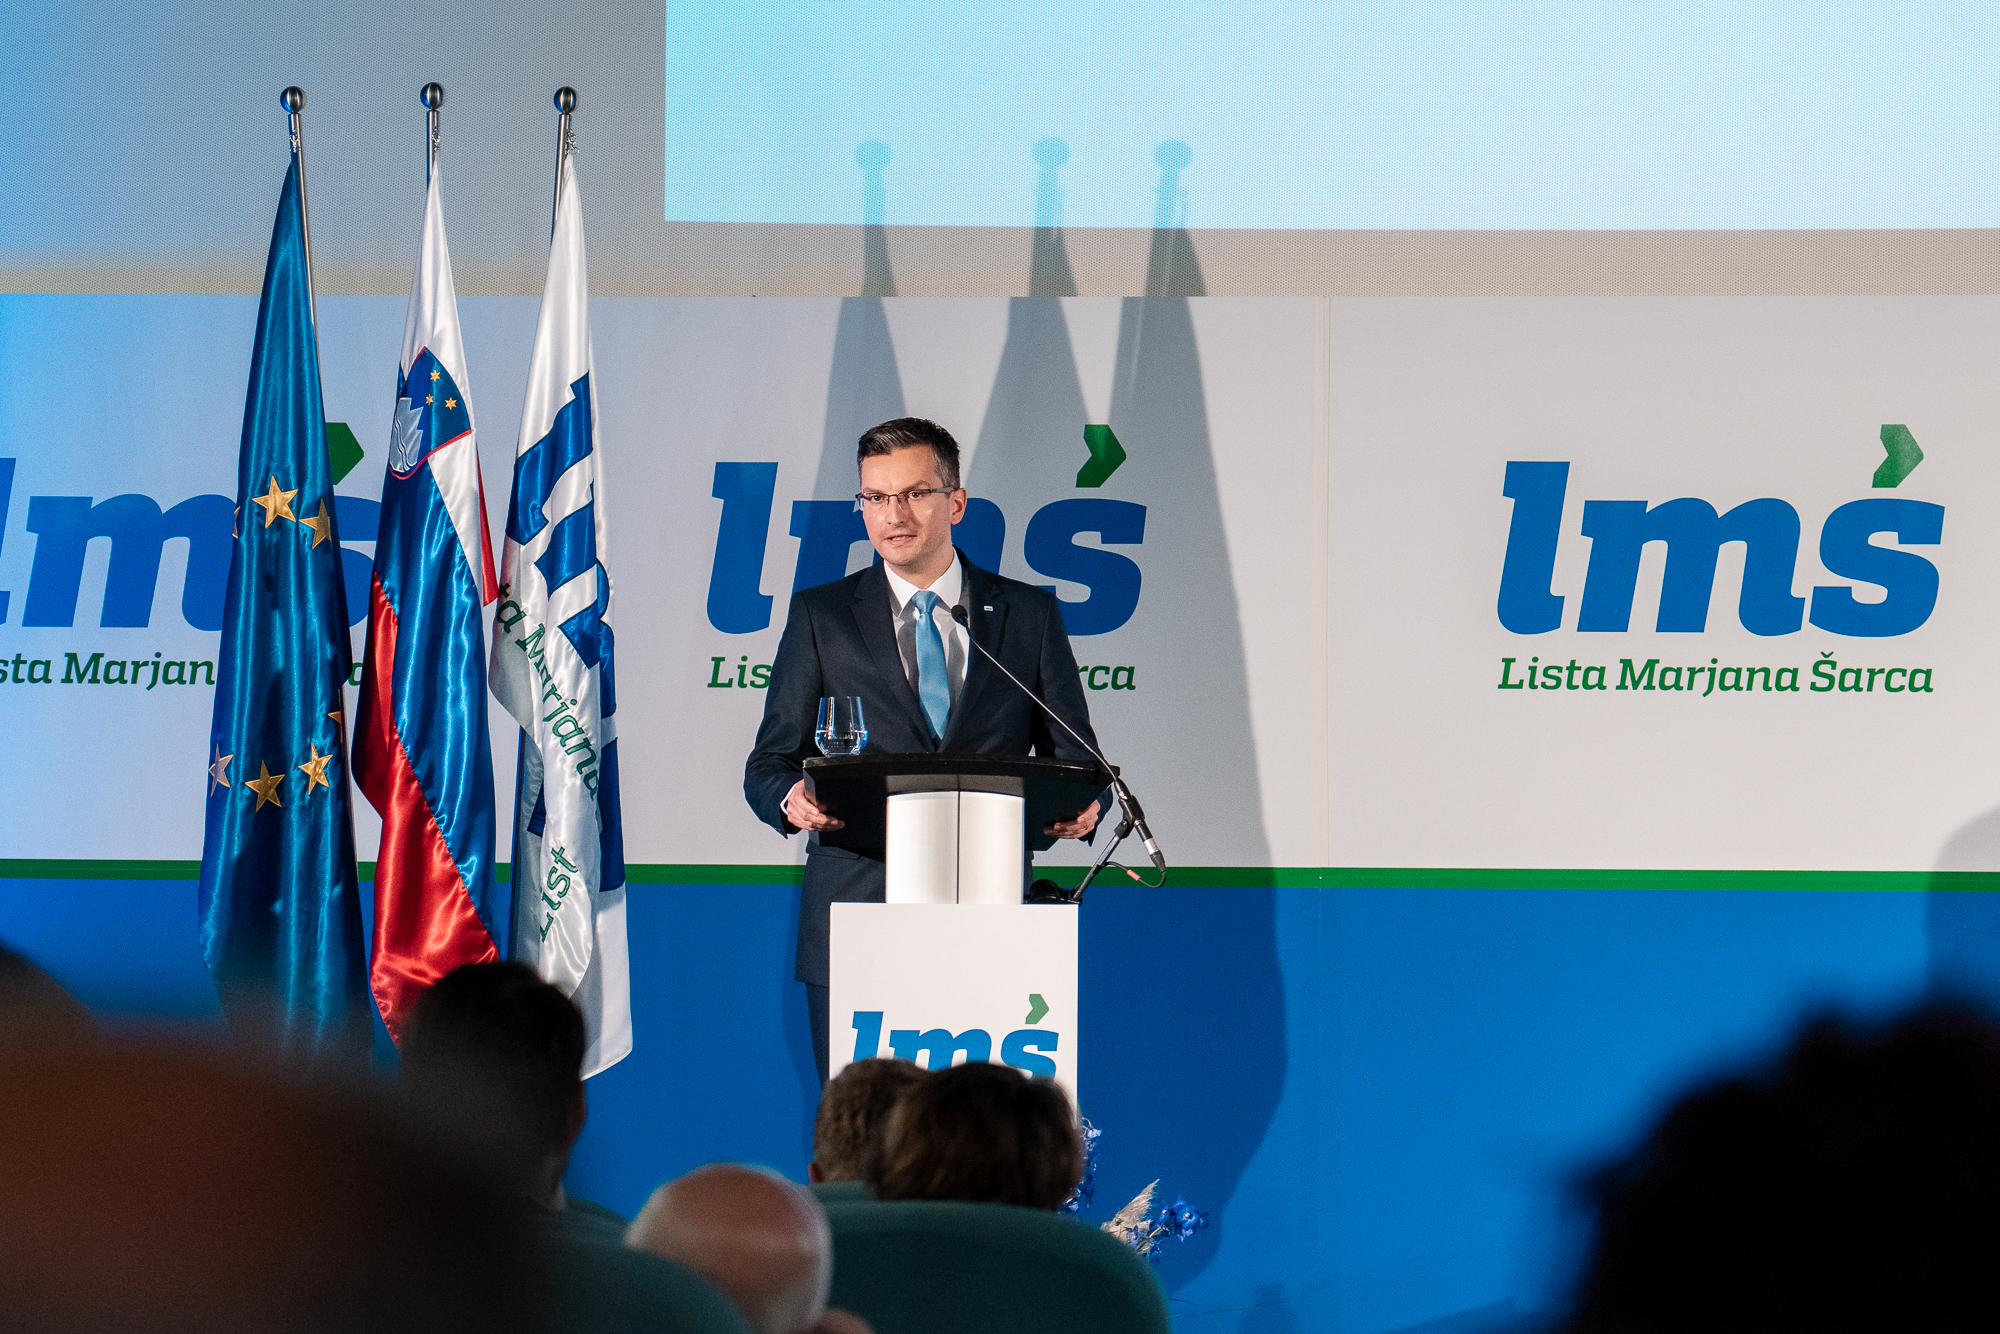 Marjan Šarec, Prime Minister of Slovenia and president of Lista Marjana Šarca, on the stage at the Fifth Congres of Lista Marjana Šarca in Trbovlje, Slovenia